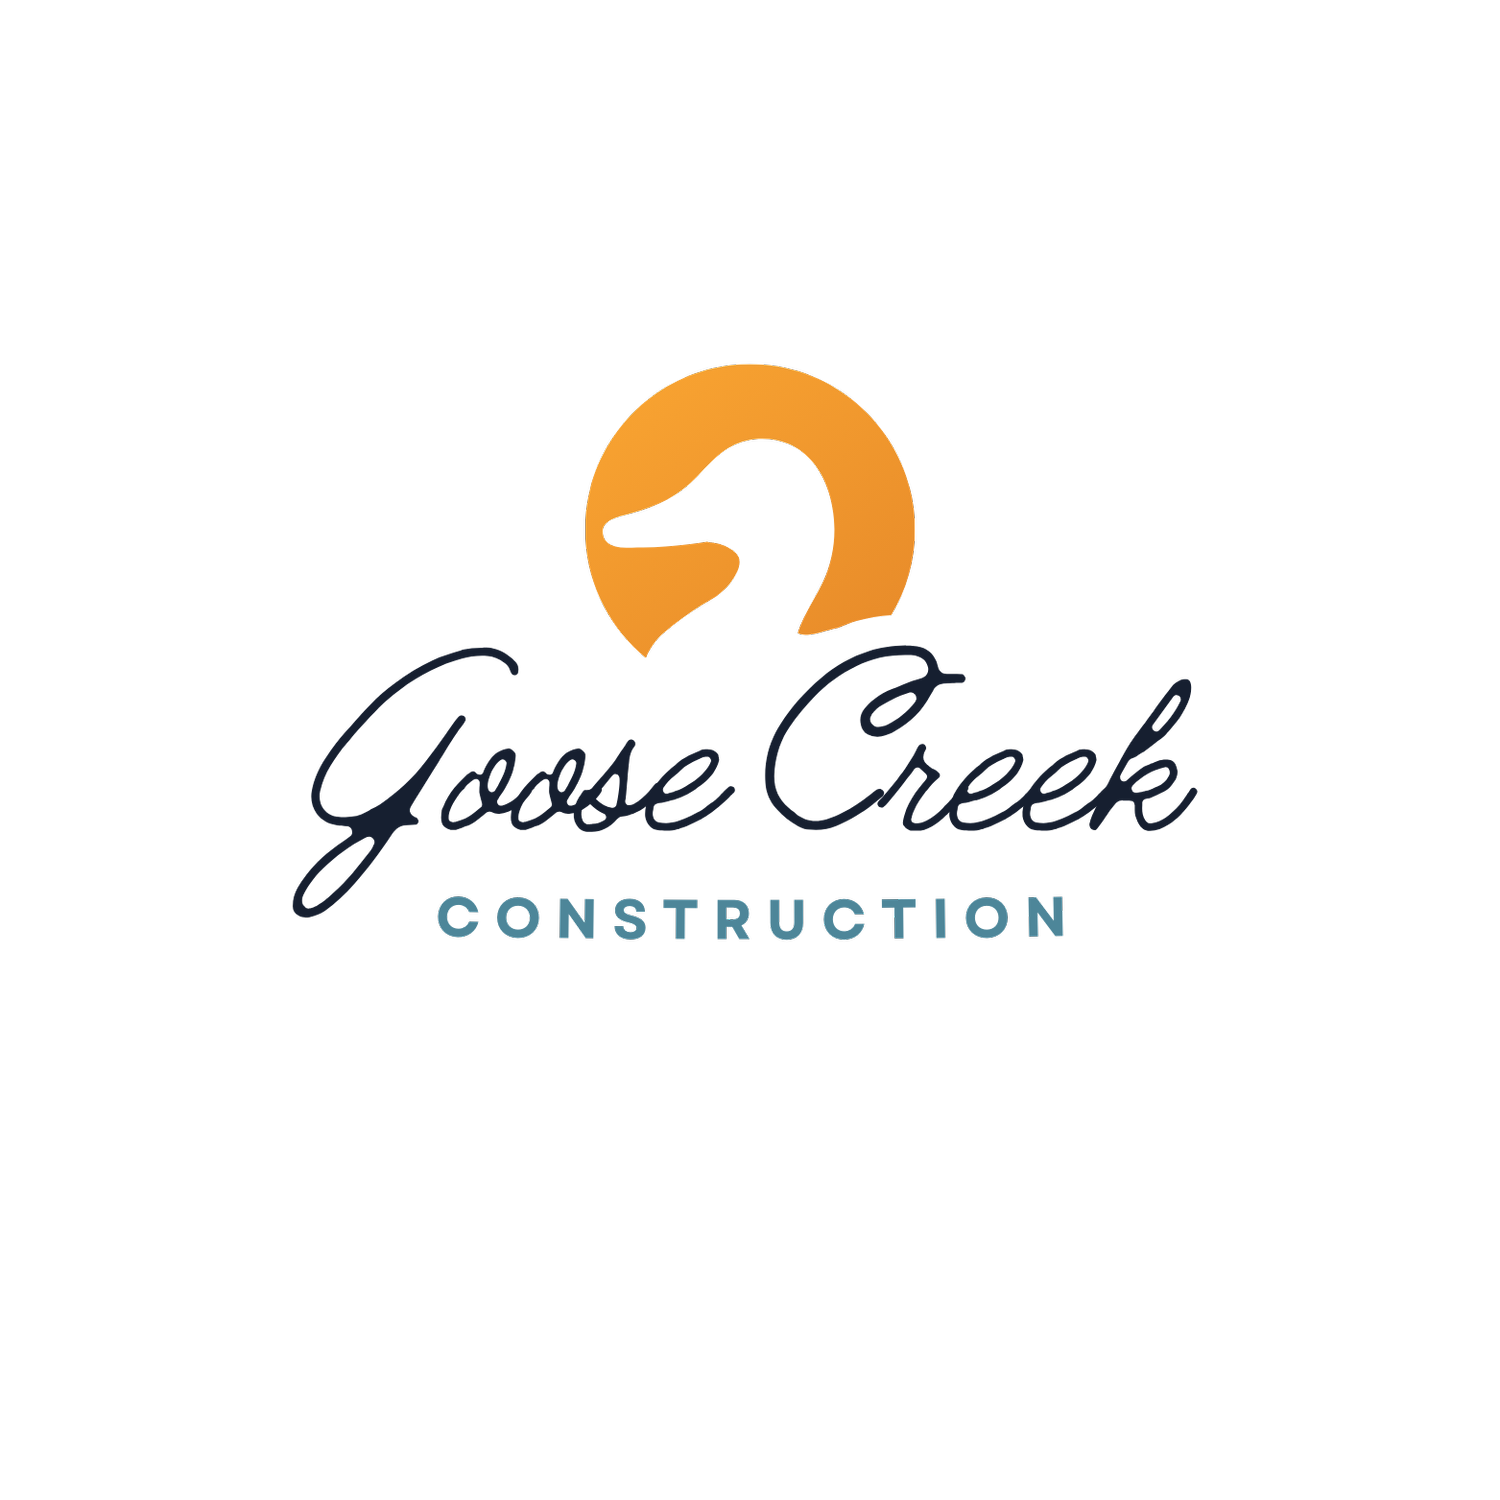 Goose Creek Coatings